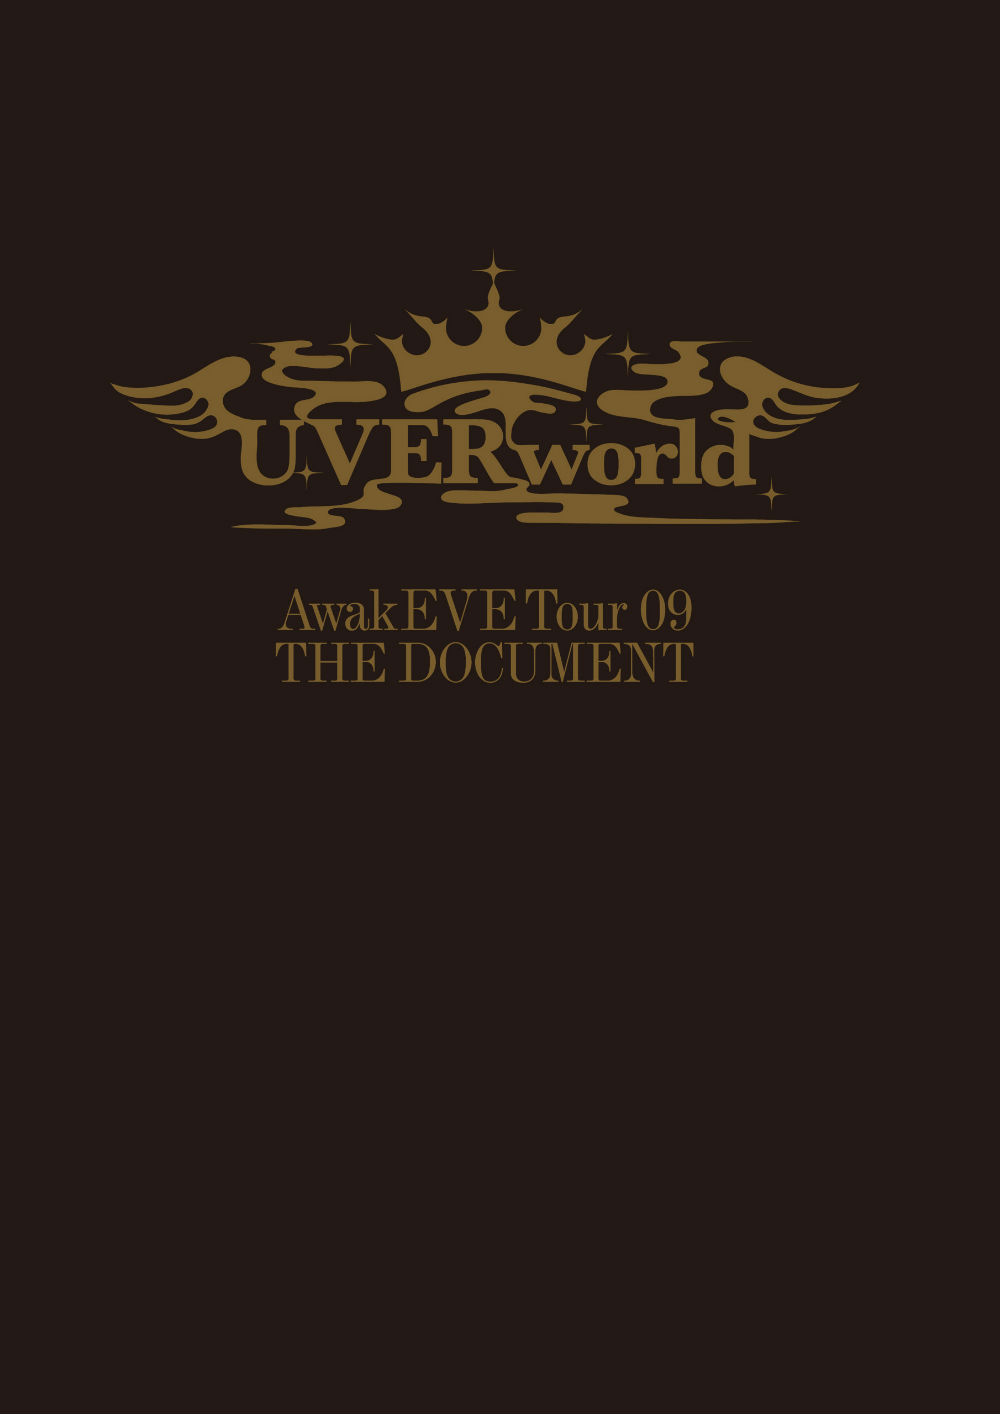 wUVERworld AwakEVE Tour09 THE DOCUMENTx©2009 POWER PLAY Inc. ©2009 Sony Magazines Inc.